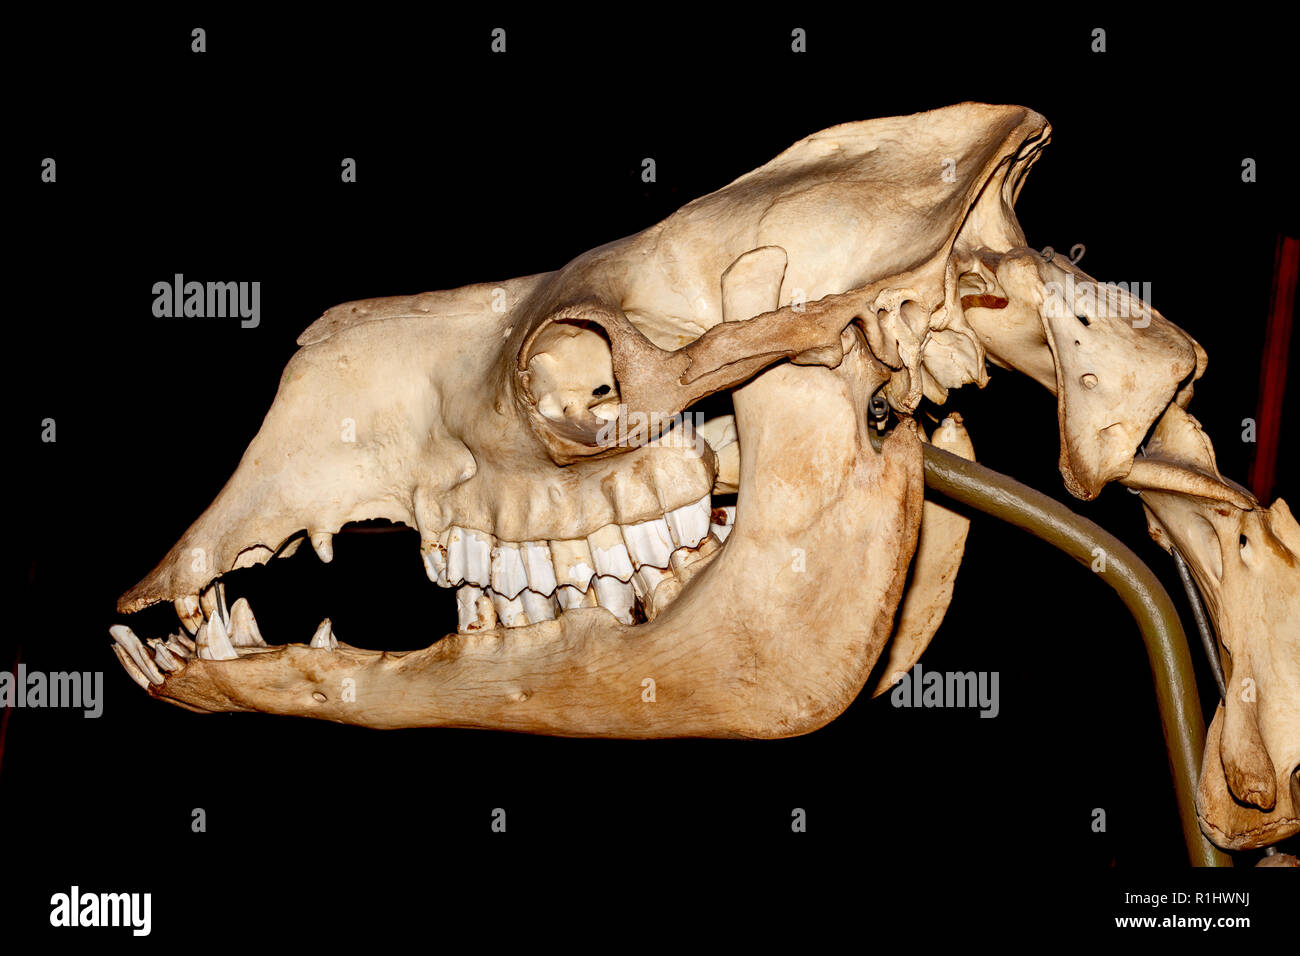 dinosaur skull Stock Photo